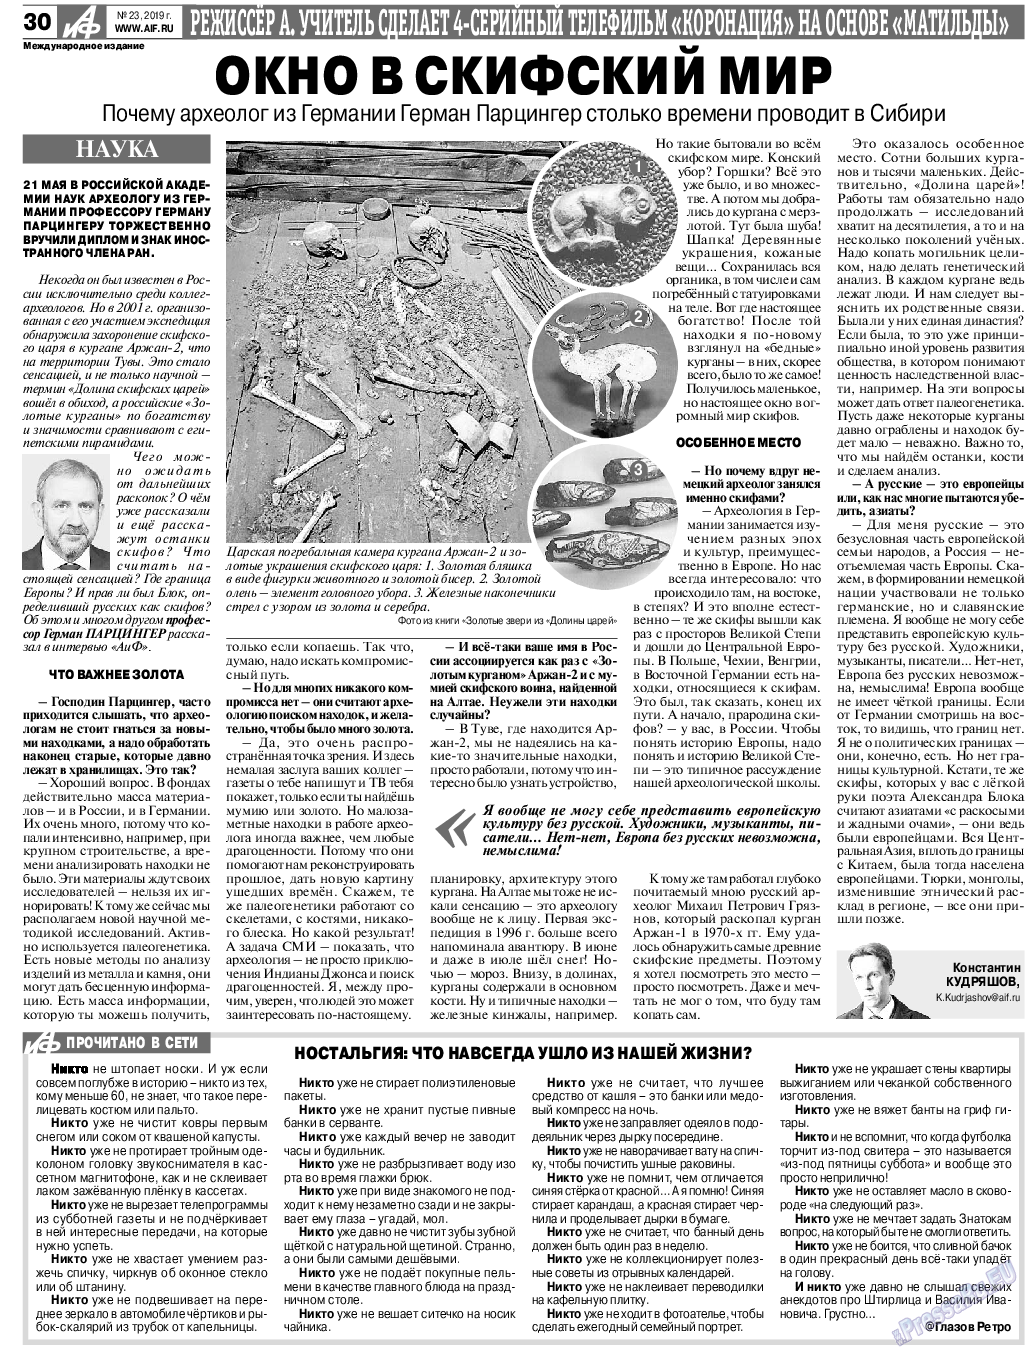 Аргументы и факты Европа, газета. 2019 №23 стр.30